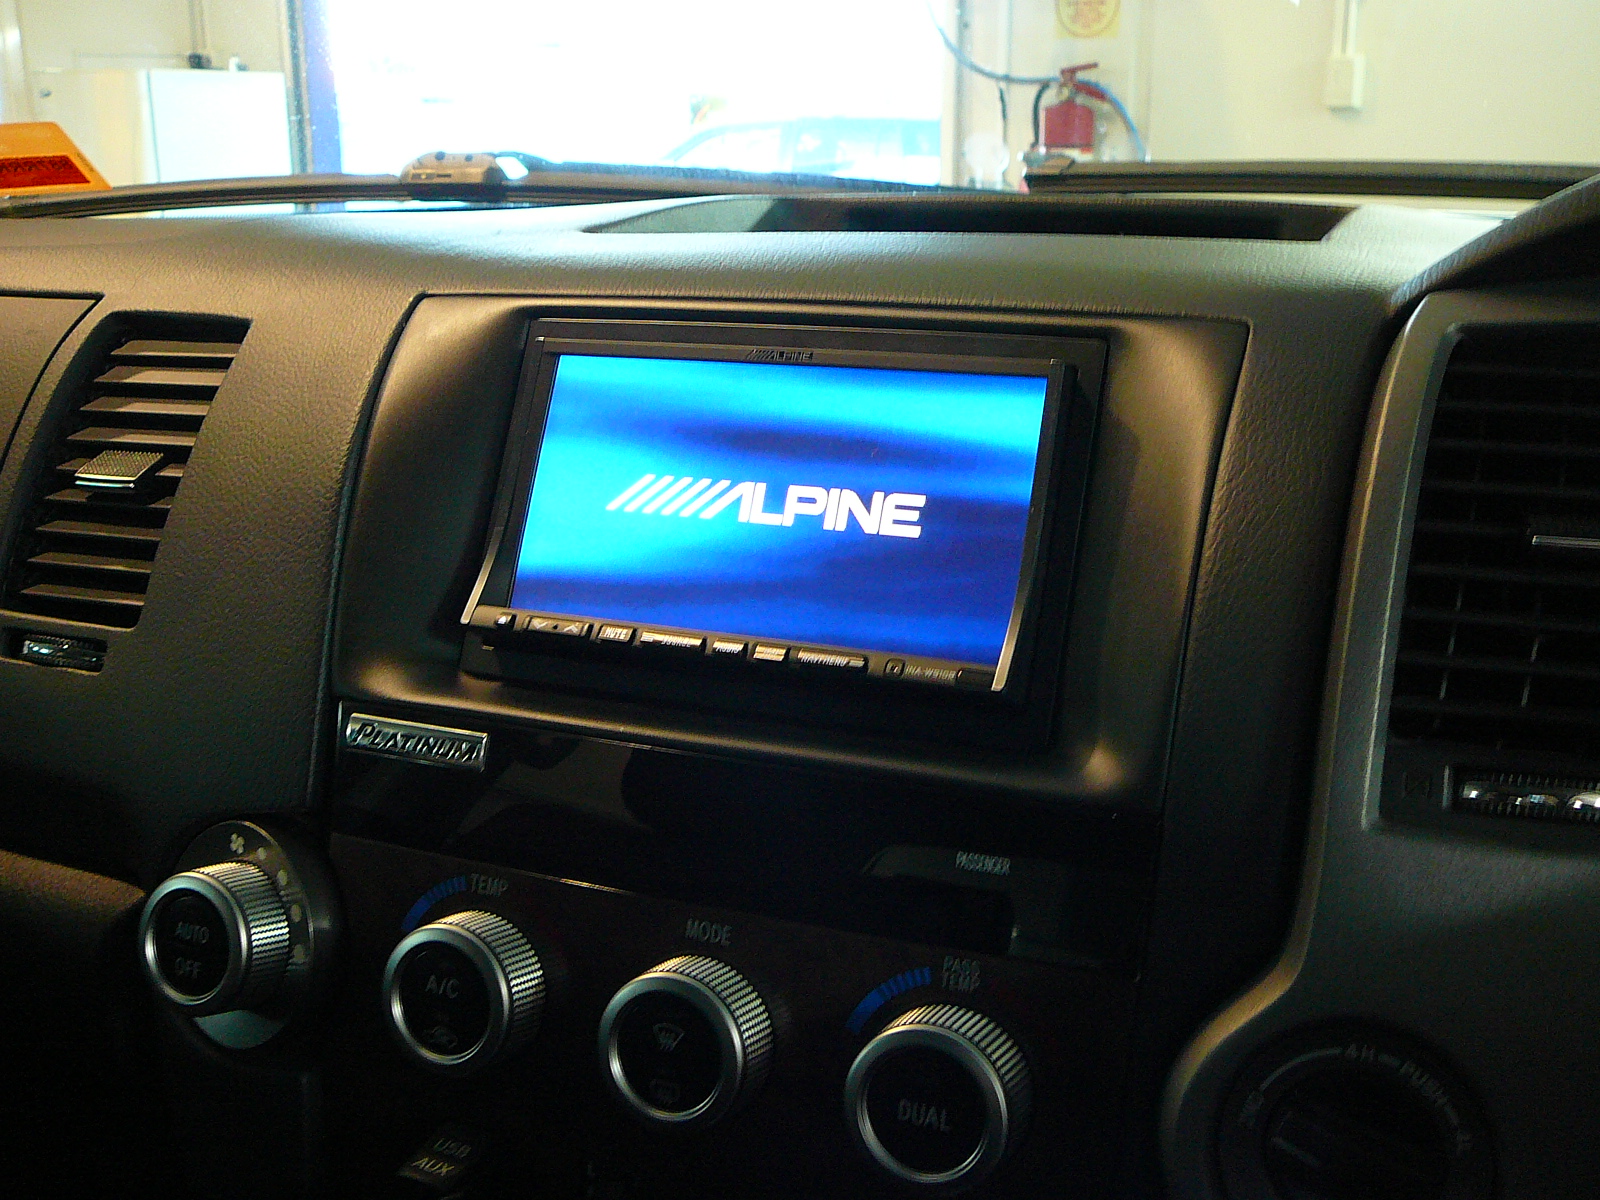 Toyota Tundra 2011 Alpine Indash Navigation system